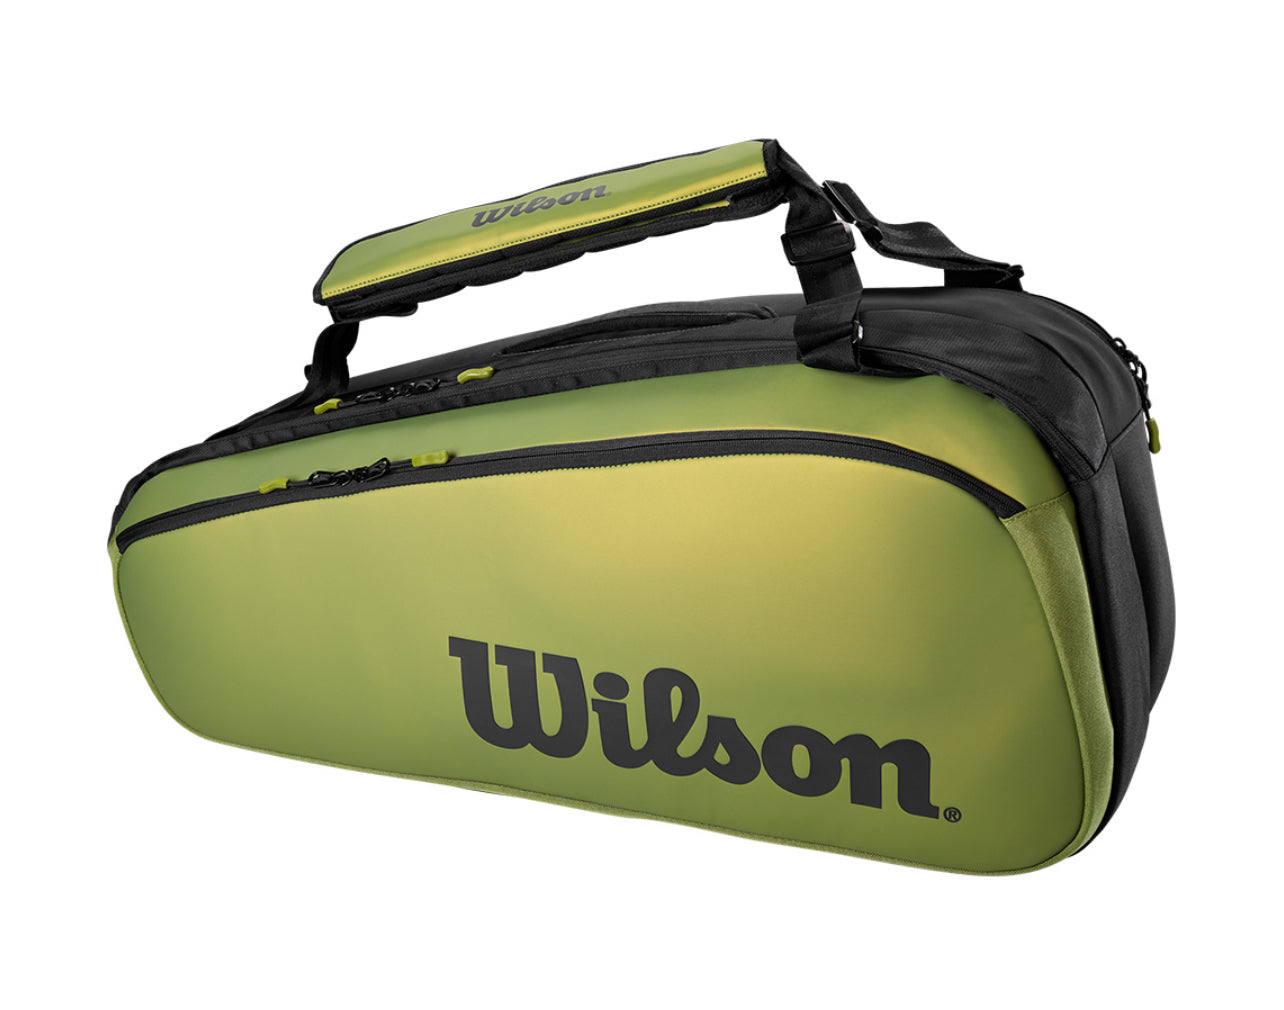 Wilson Blade Super Tour 9 Pack Tennis Bag